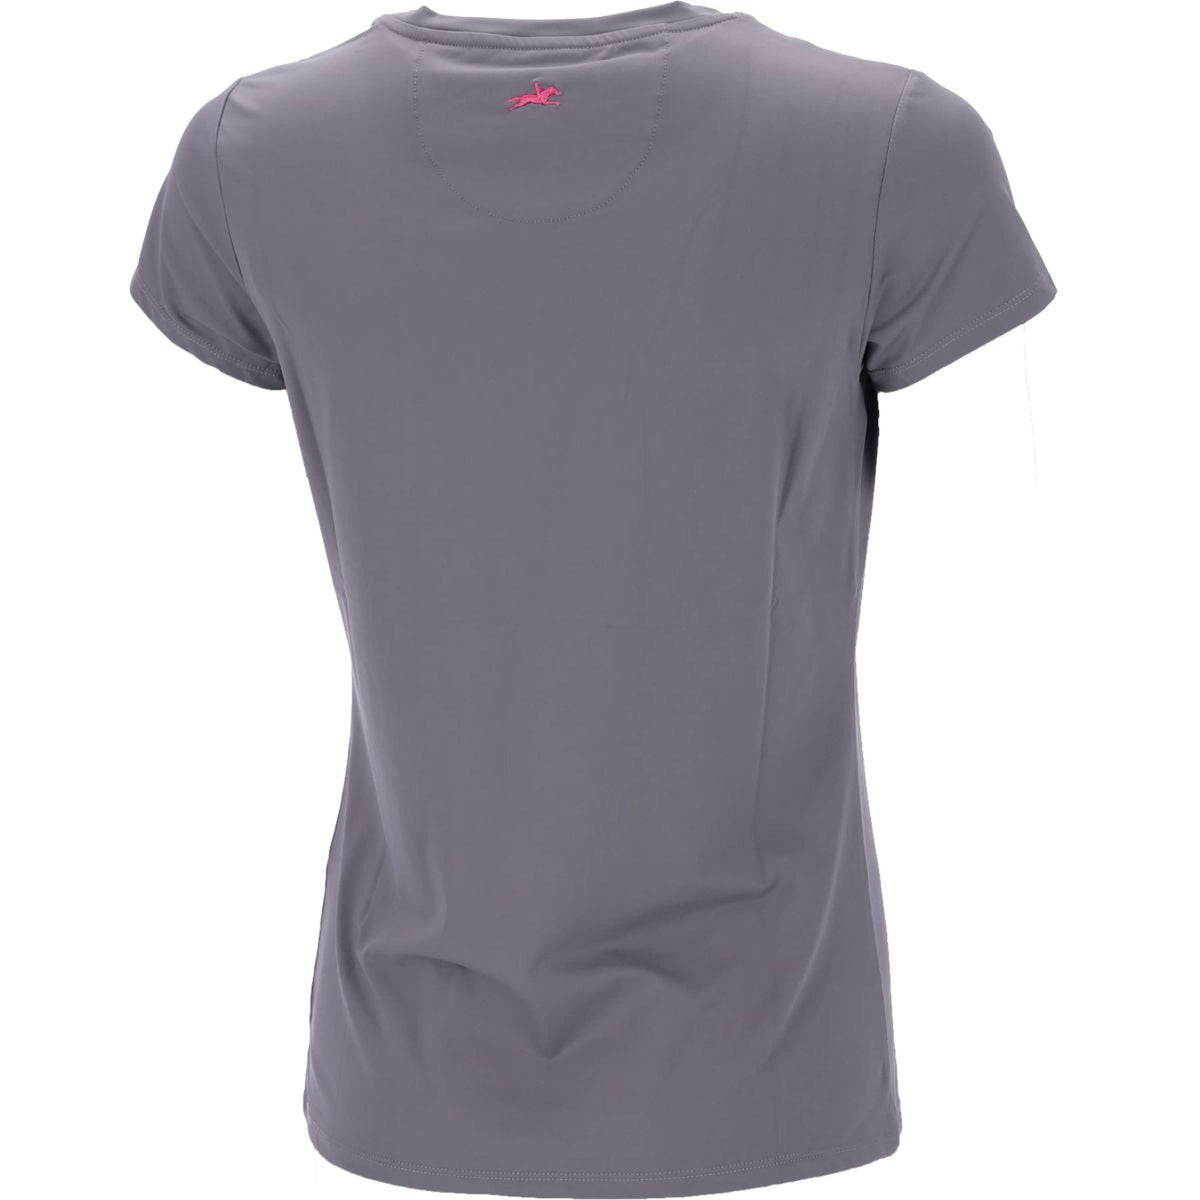 Schockemöhle T-Shirt Nicola Slate Grey